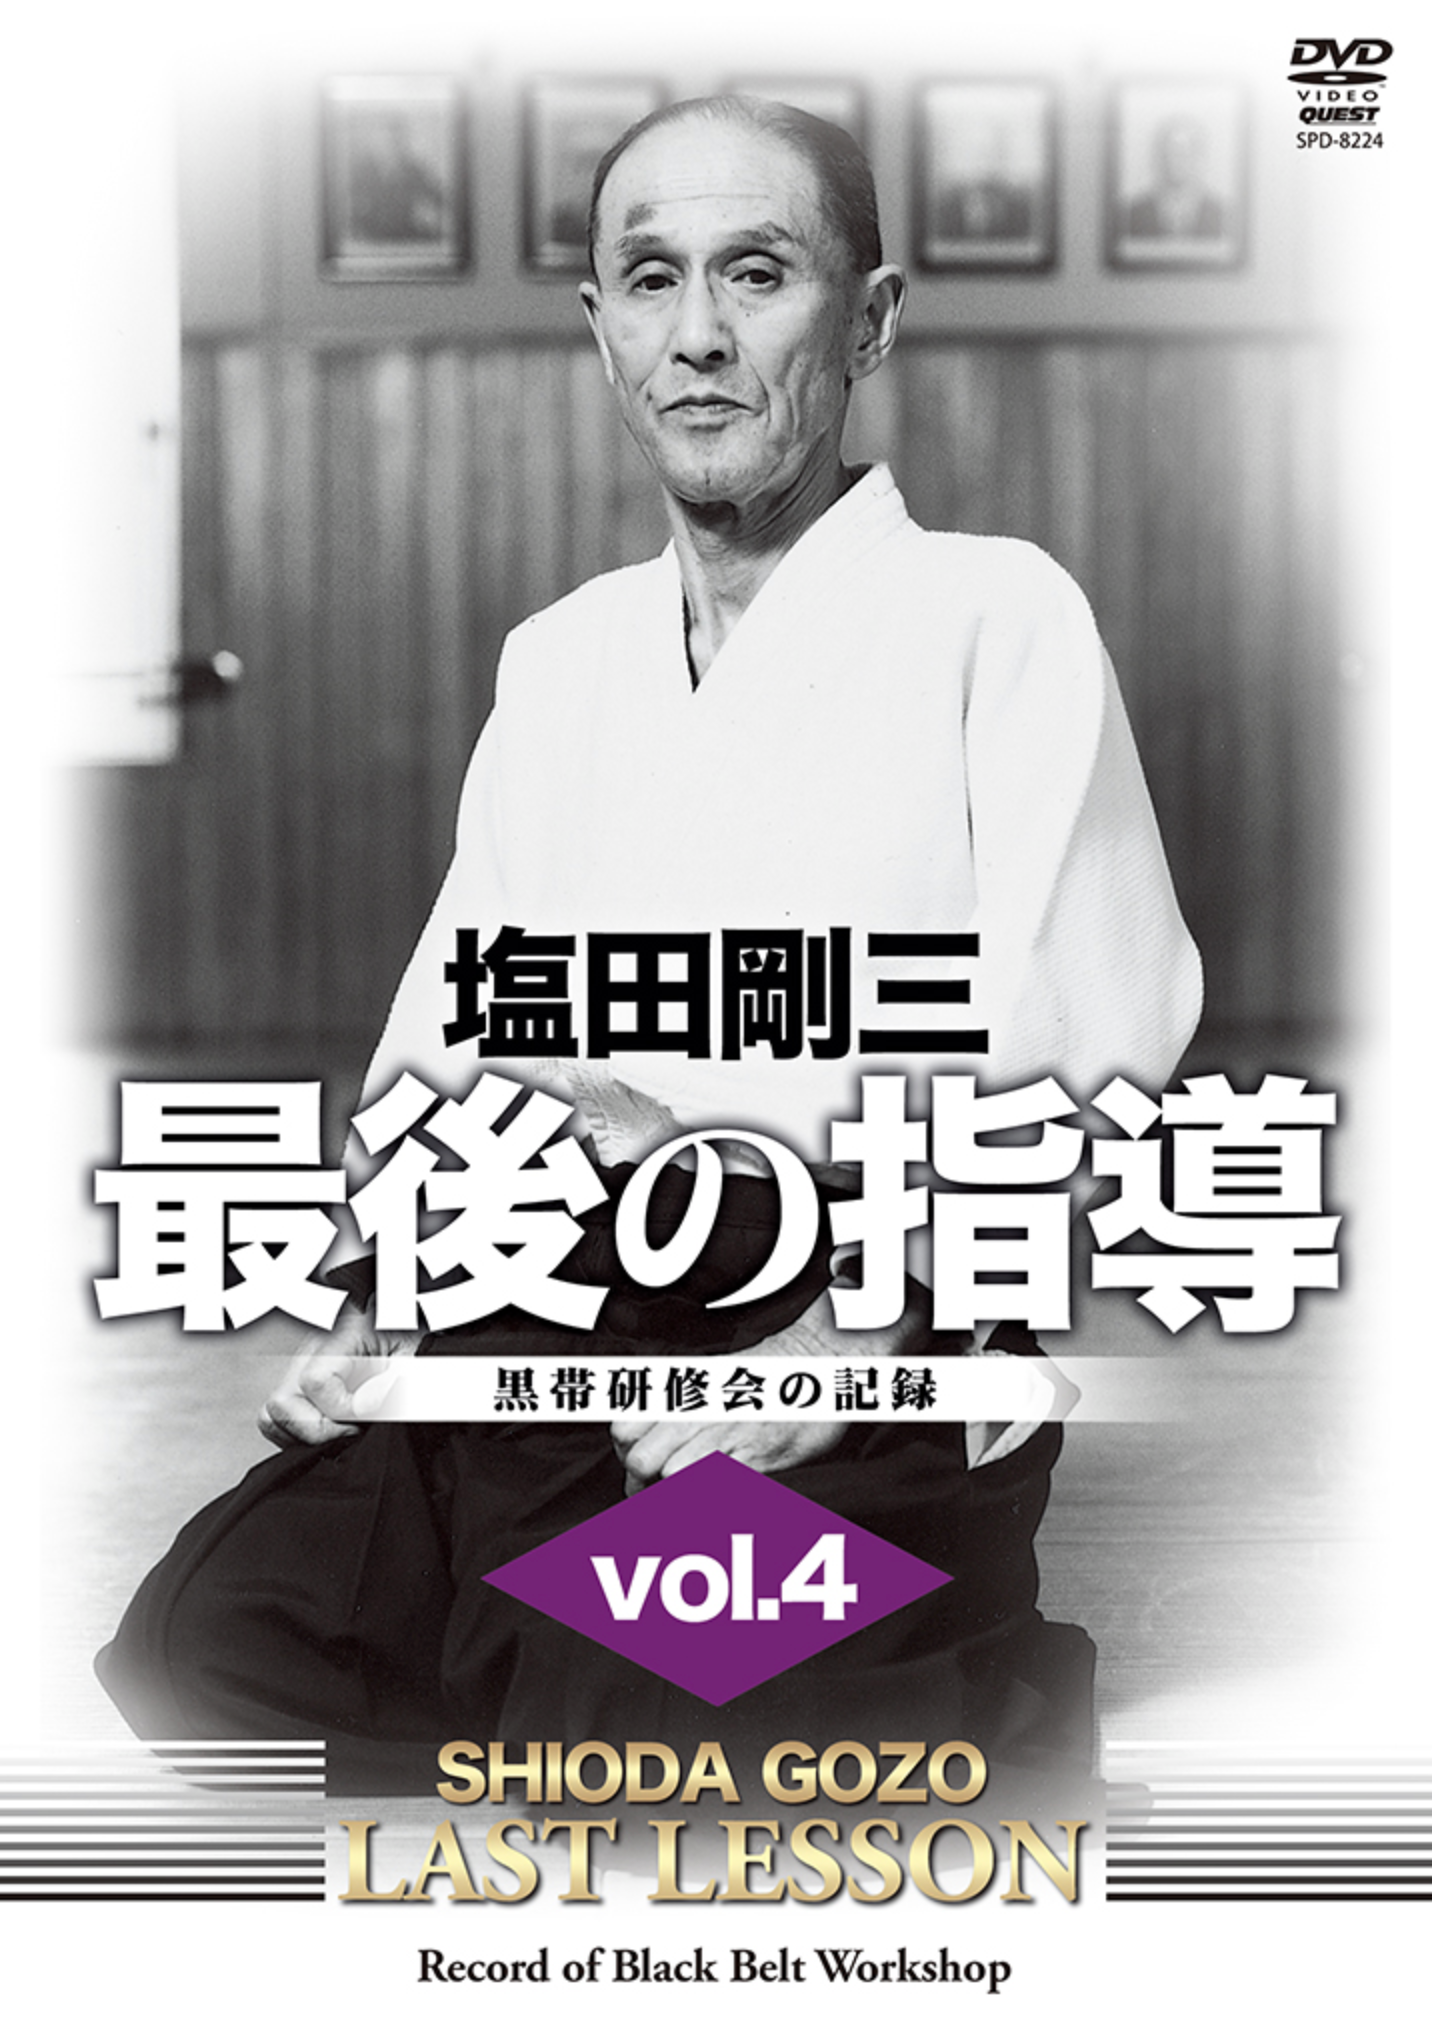 Gozo Shioda Last Lesson DVD 4 Yoshinkan Aikido - Budovideos Inc